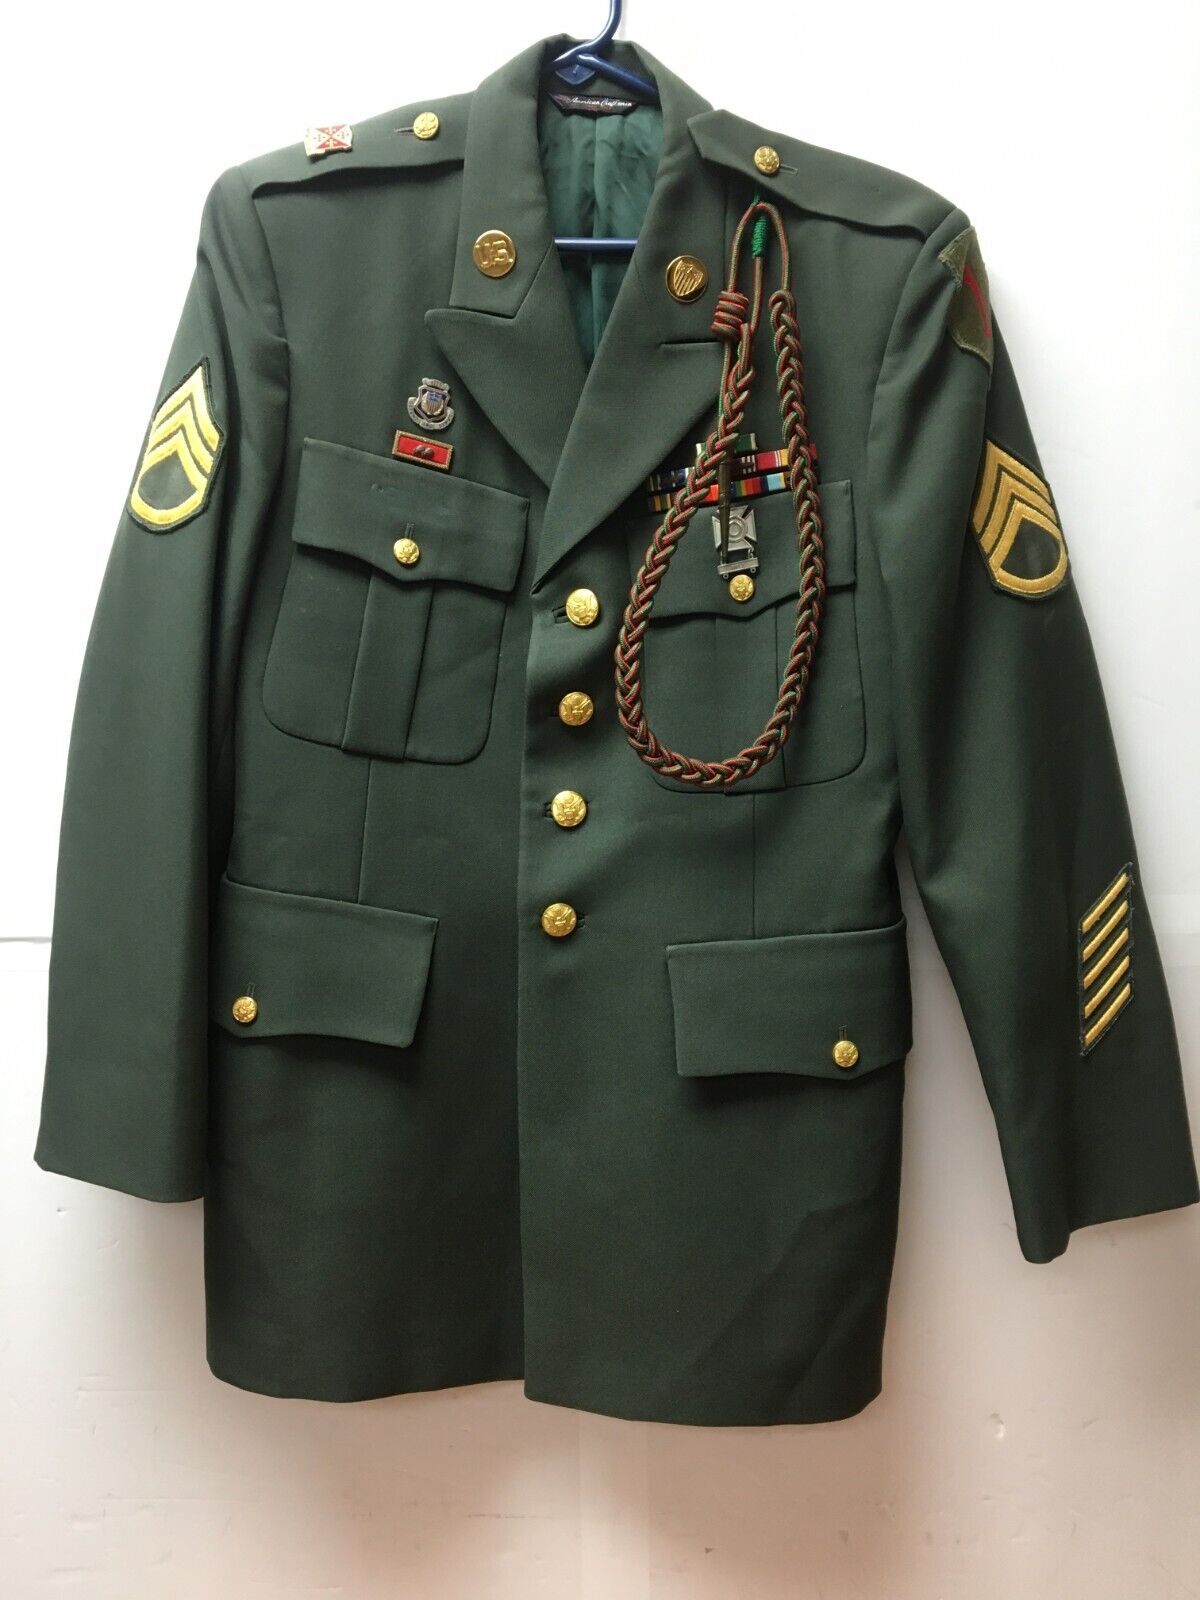 US ARMY  Dress Green Uniform Jacket see measurements American Craftsmen Patriot